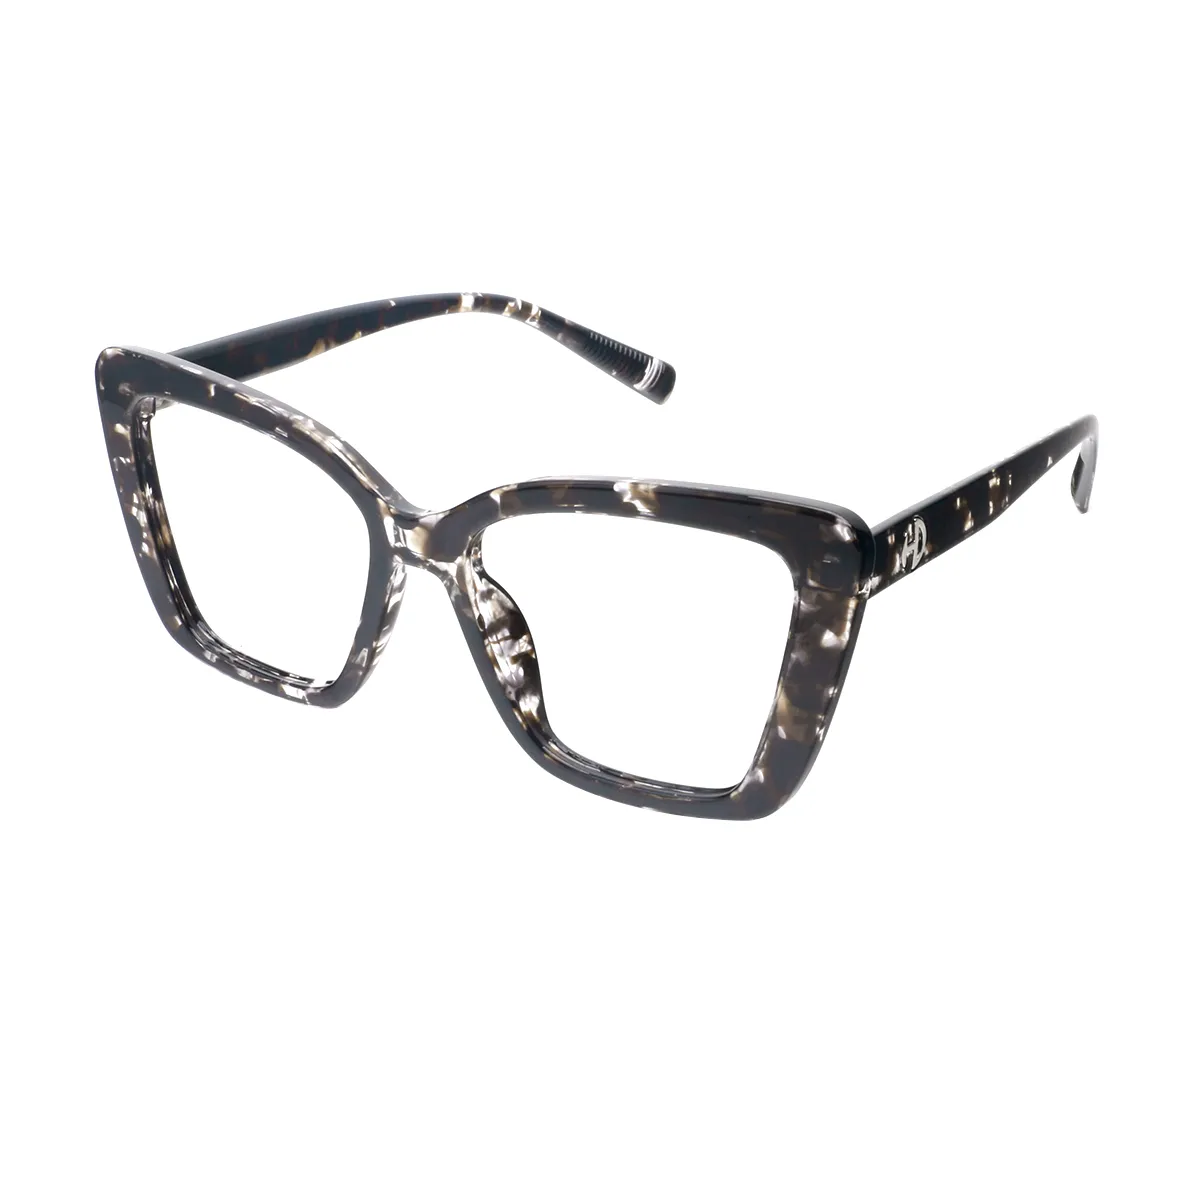 Cordelia - Square Tortoiseshell Glasses for Women